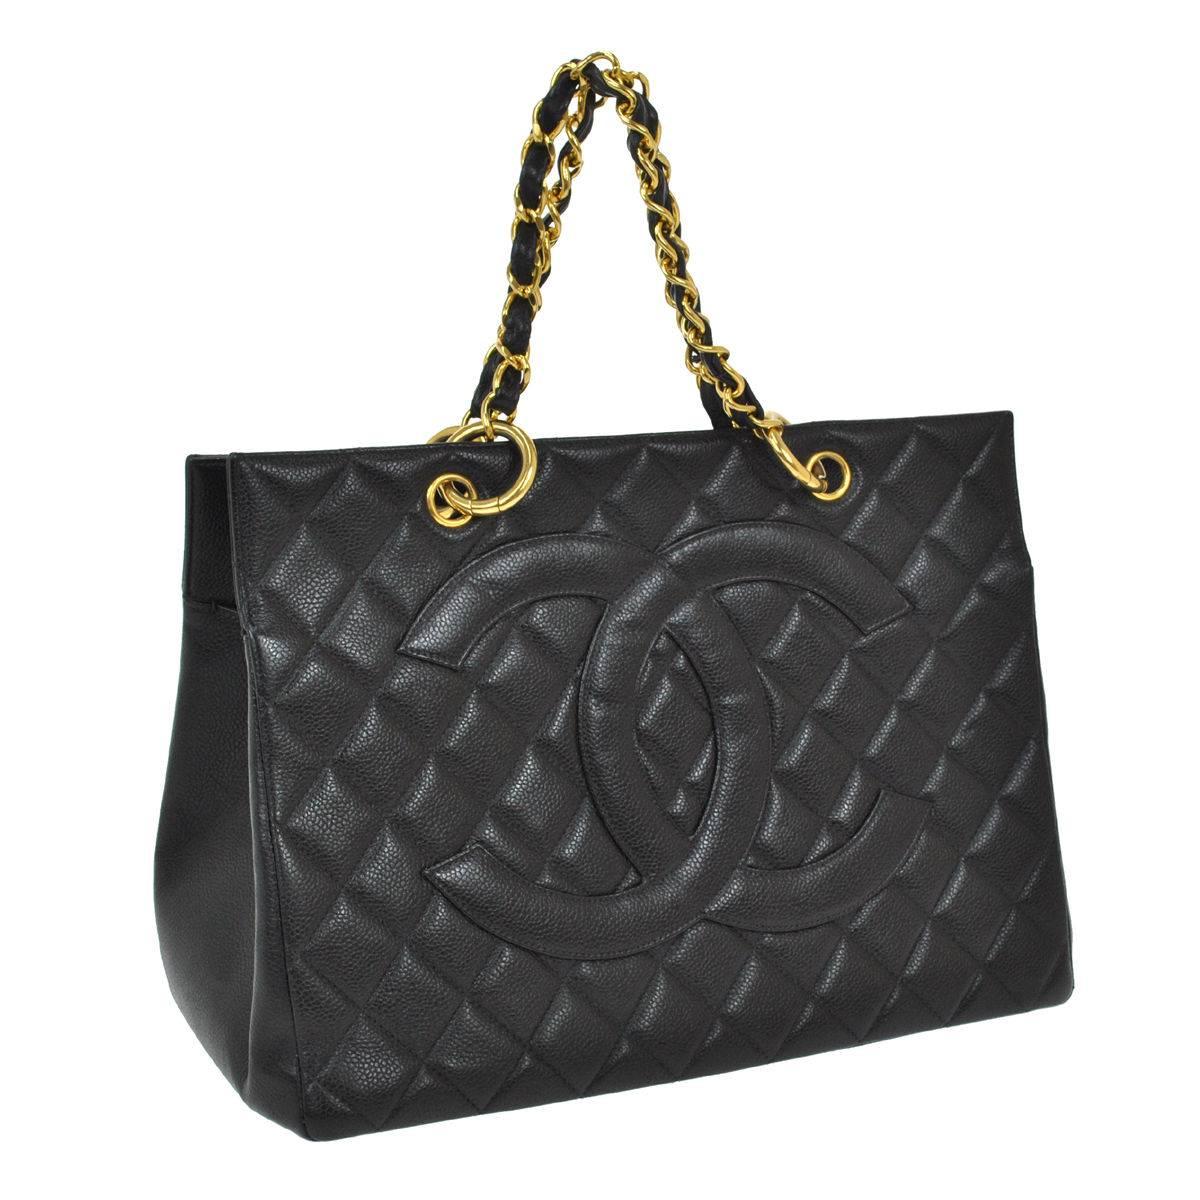 Chanel Black Caviar Leather Carryall Travel Top Handle Shoulder Tote Bag